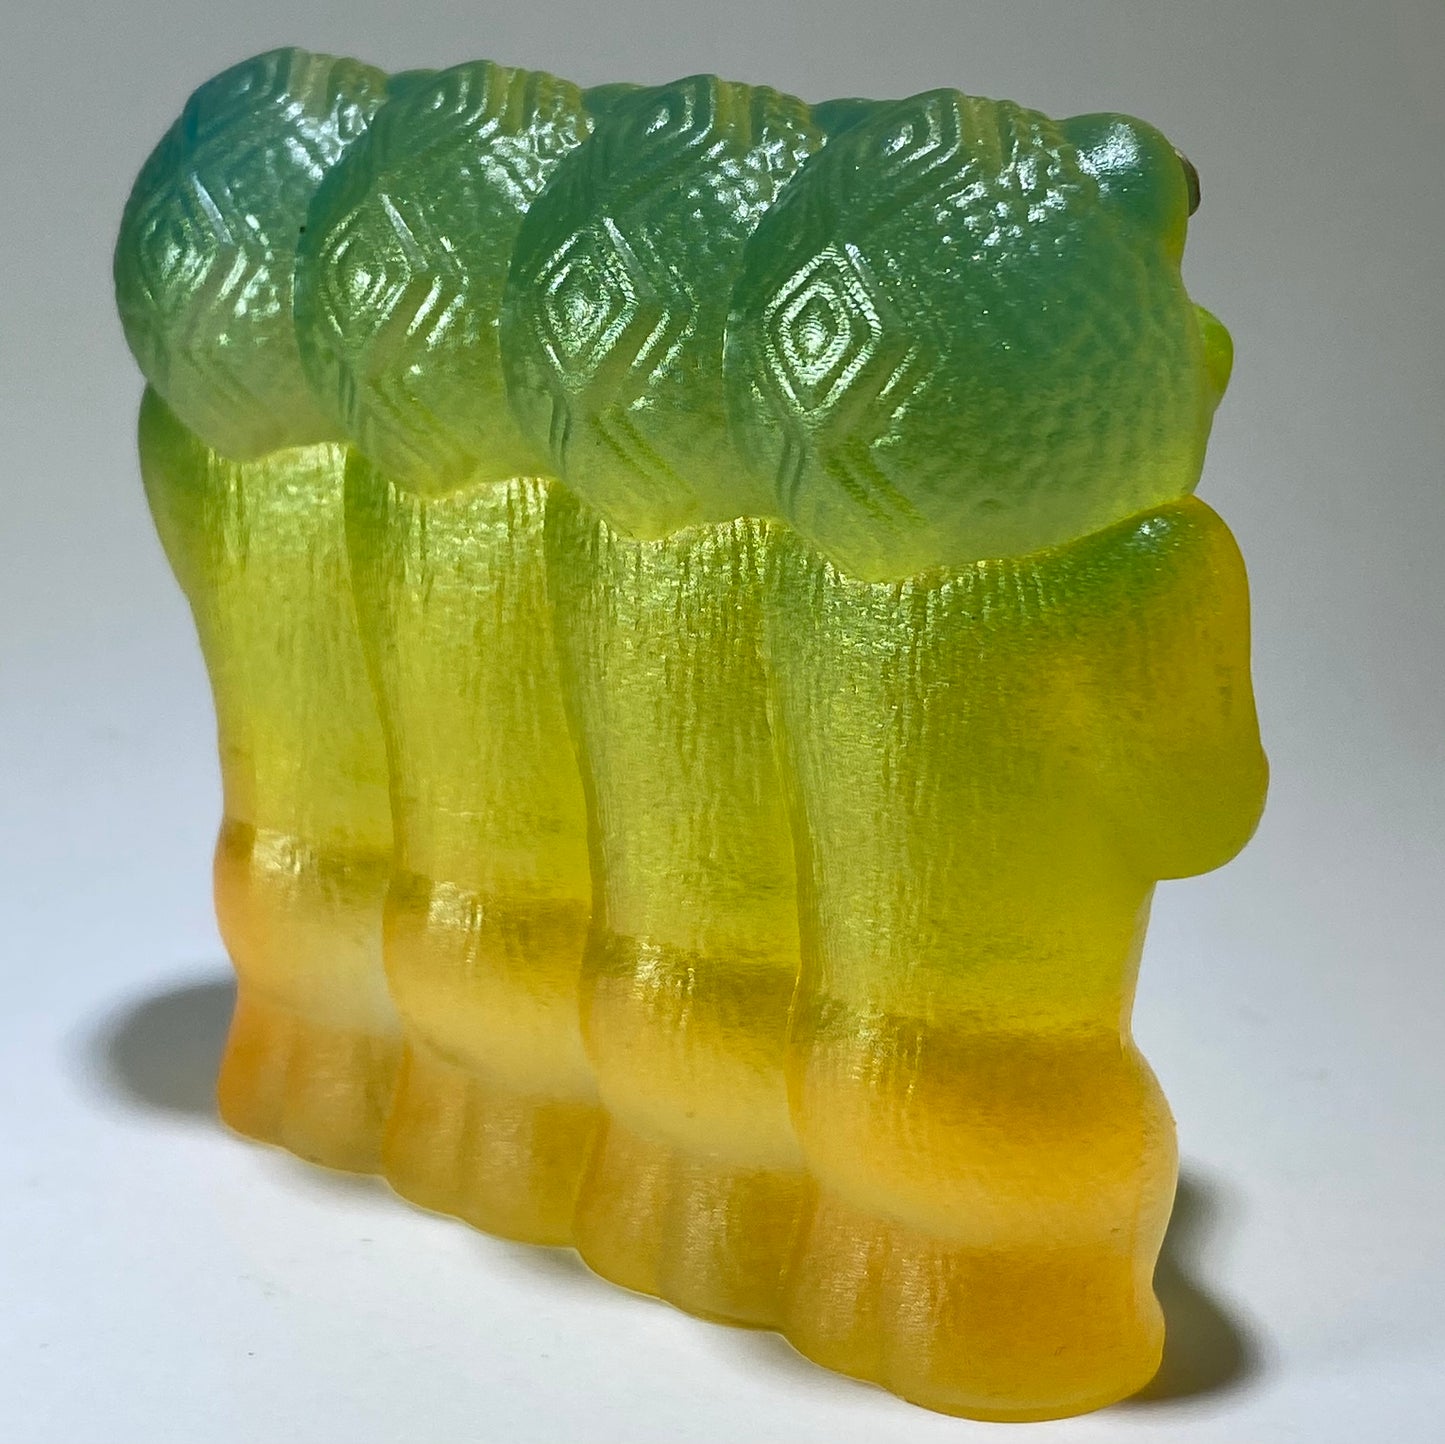 Crocodile Ape Cult, 4 Headed: green/yellow/orange